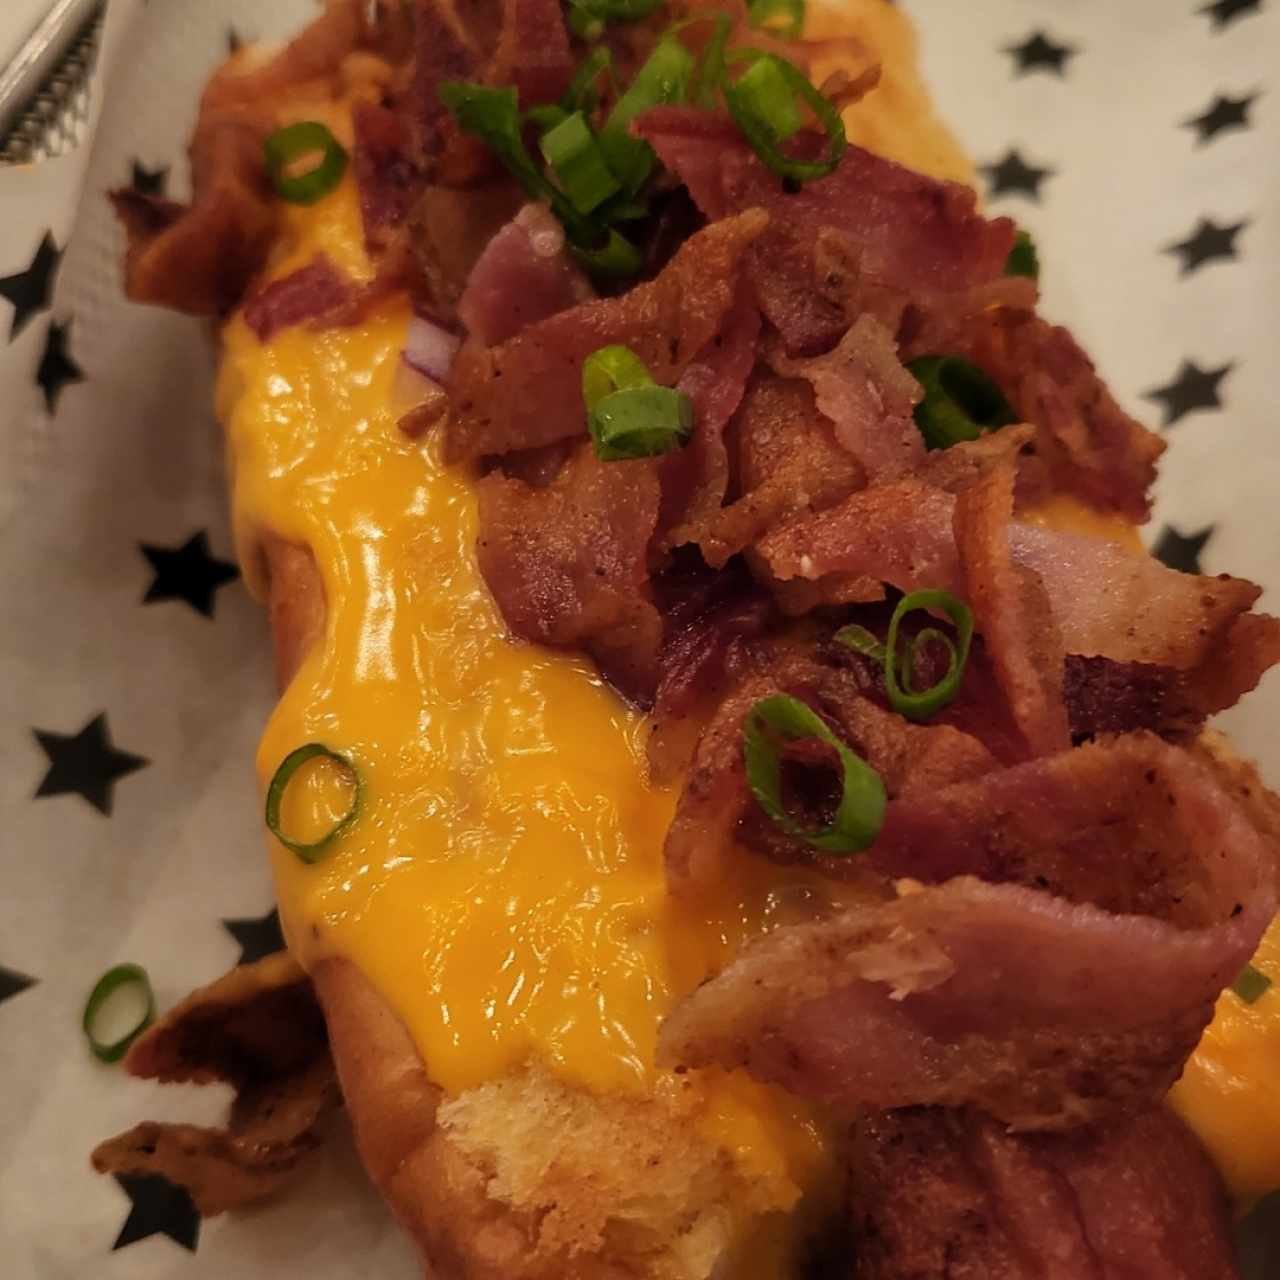 Hot Dogs - Chili Dog